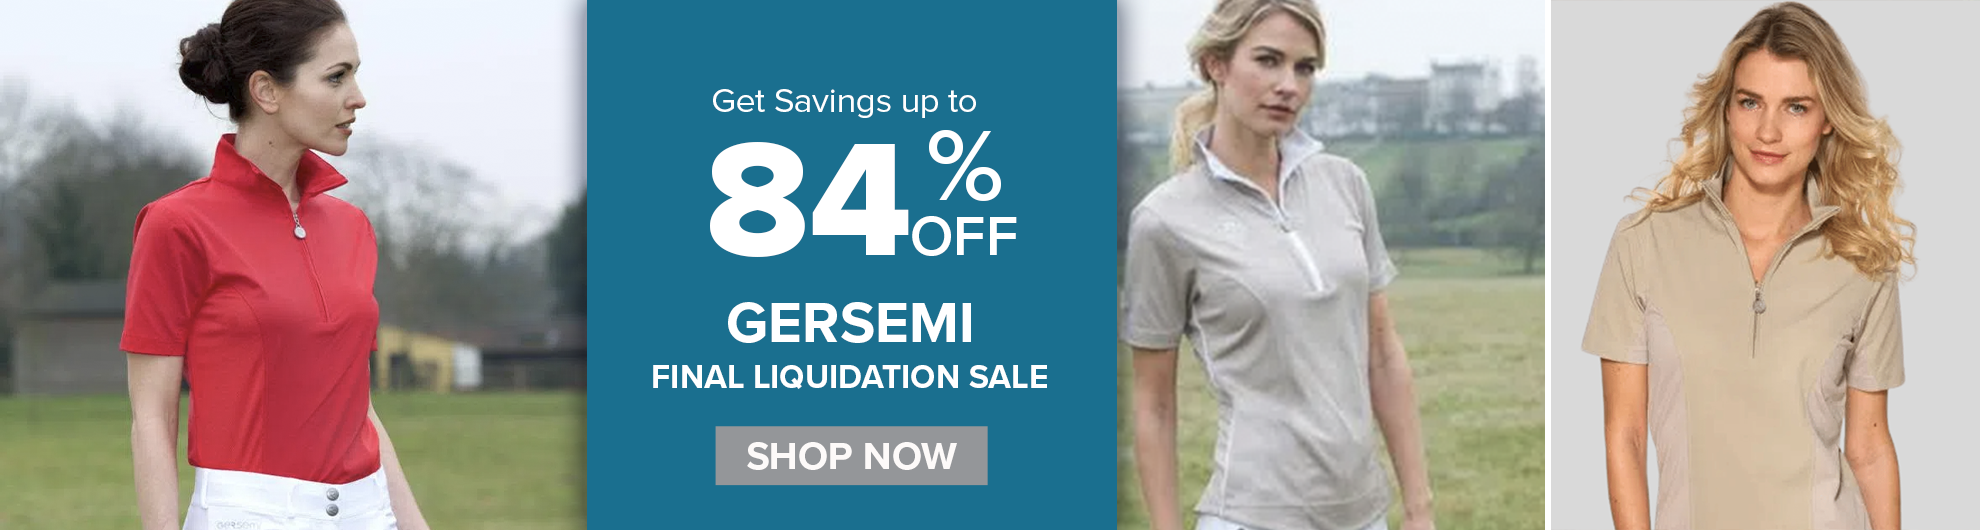 Shop the Gersemi Liquidation Sale